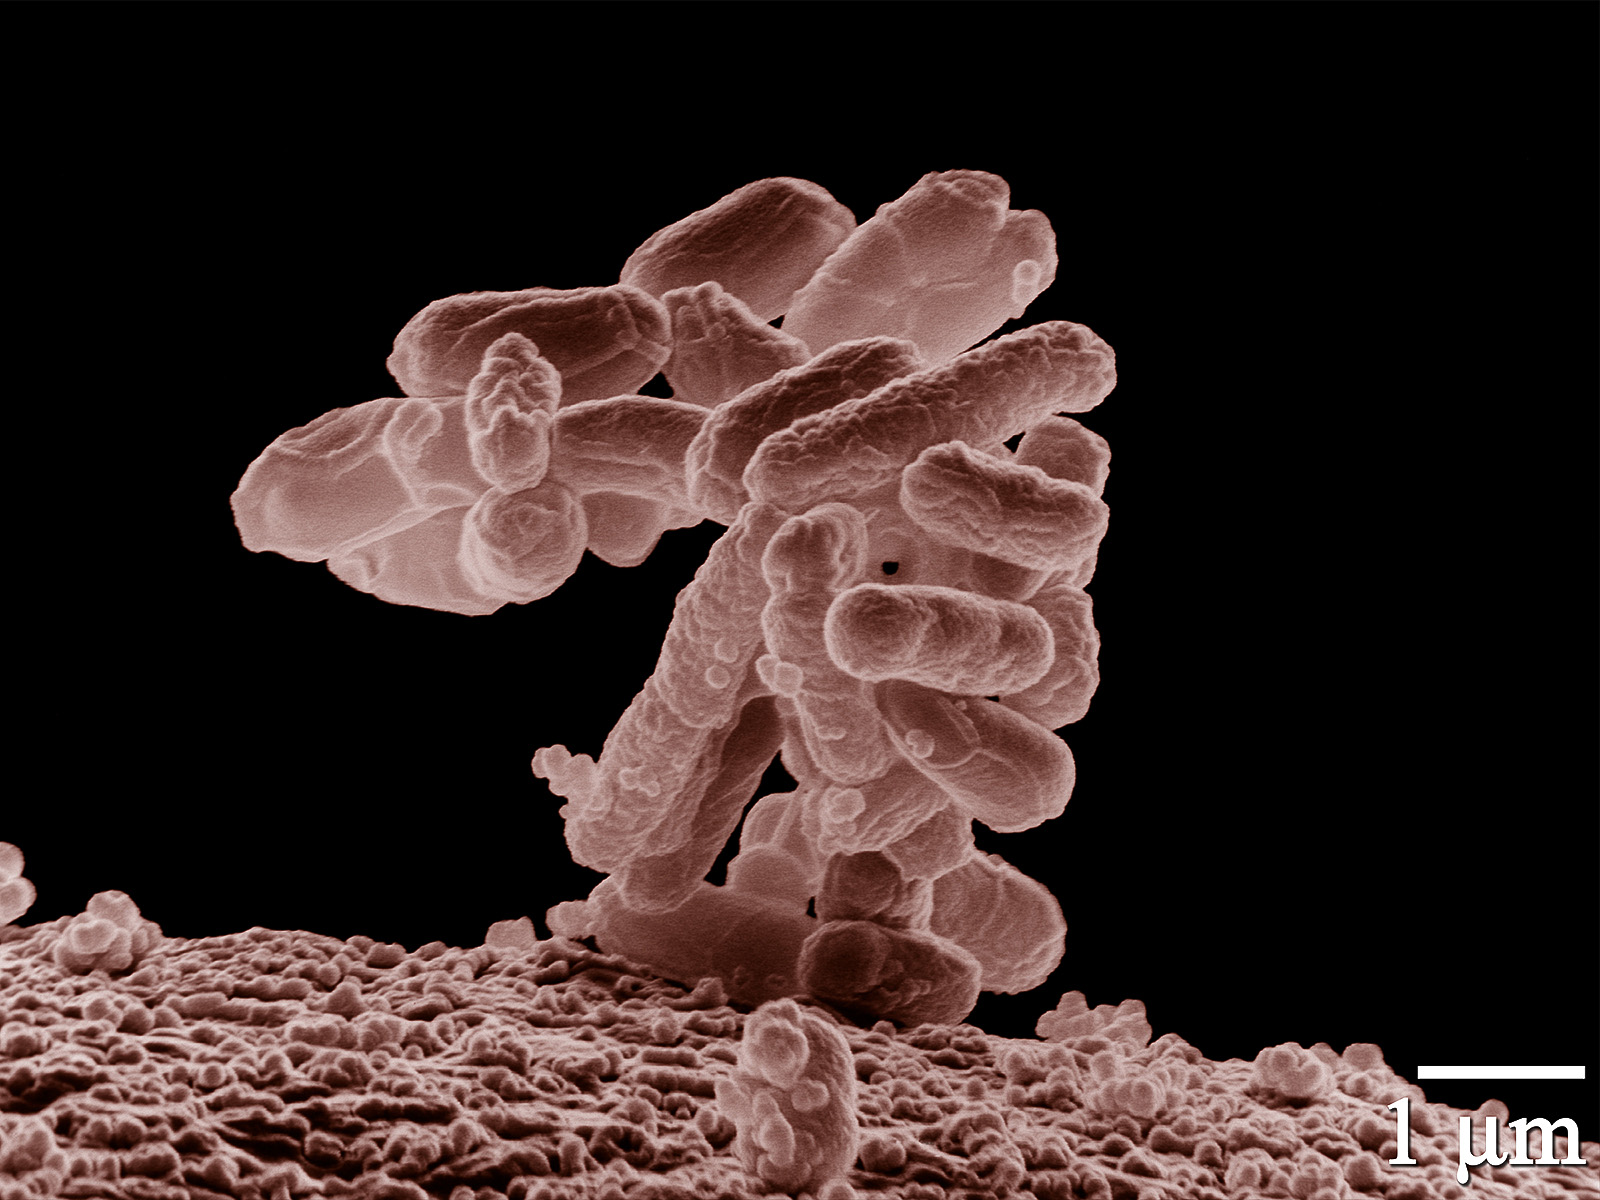 Bacteria resistant to a last-resort drug showed up on a US pig farm